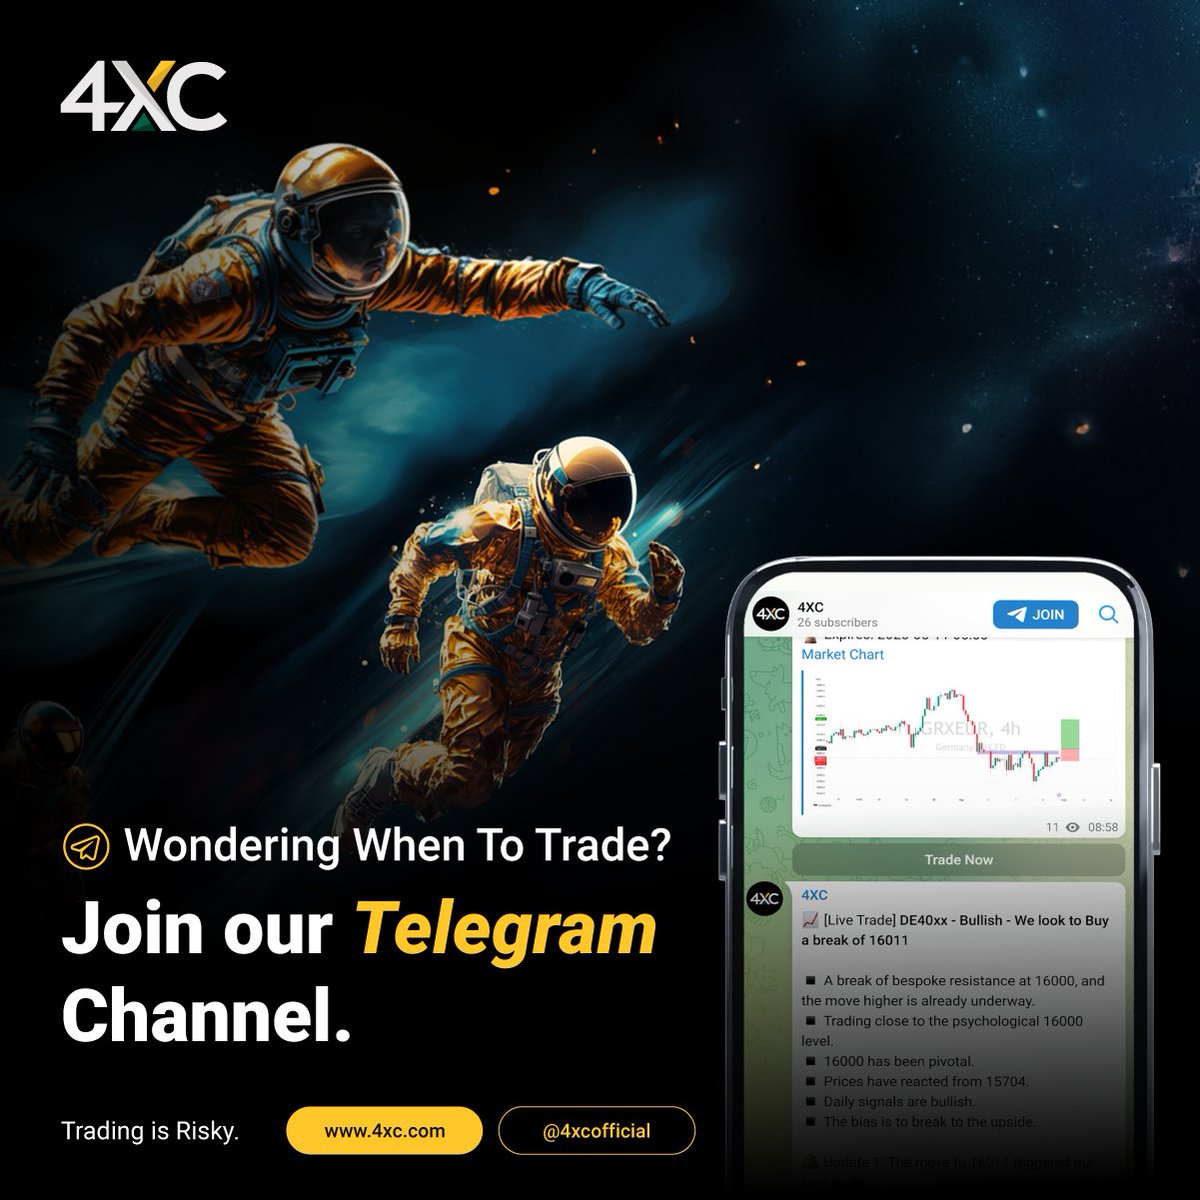 Wondering When To Trade?
Join our Telegram Channel💪📲

*Trading Is Risky.
#4XC #TelegramChannel #FinanceGurus #TradingTips #InvestmentInsights #JoinUsNow #FinancialFreedom #MarketUpdates